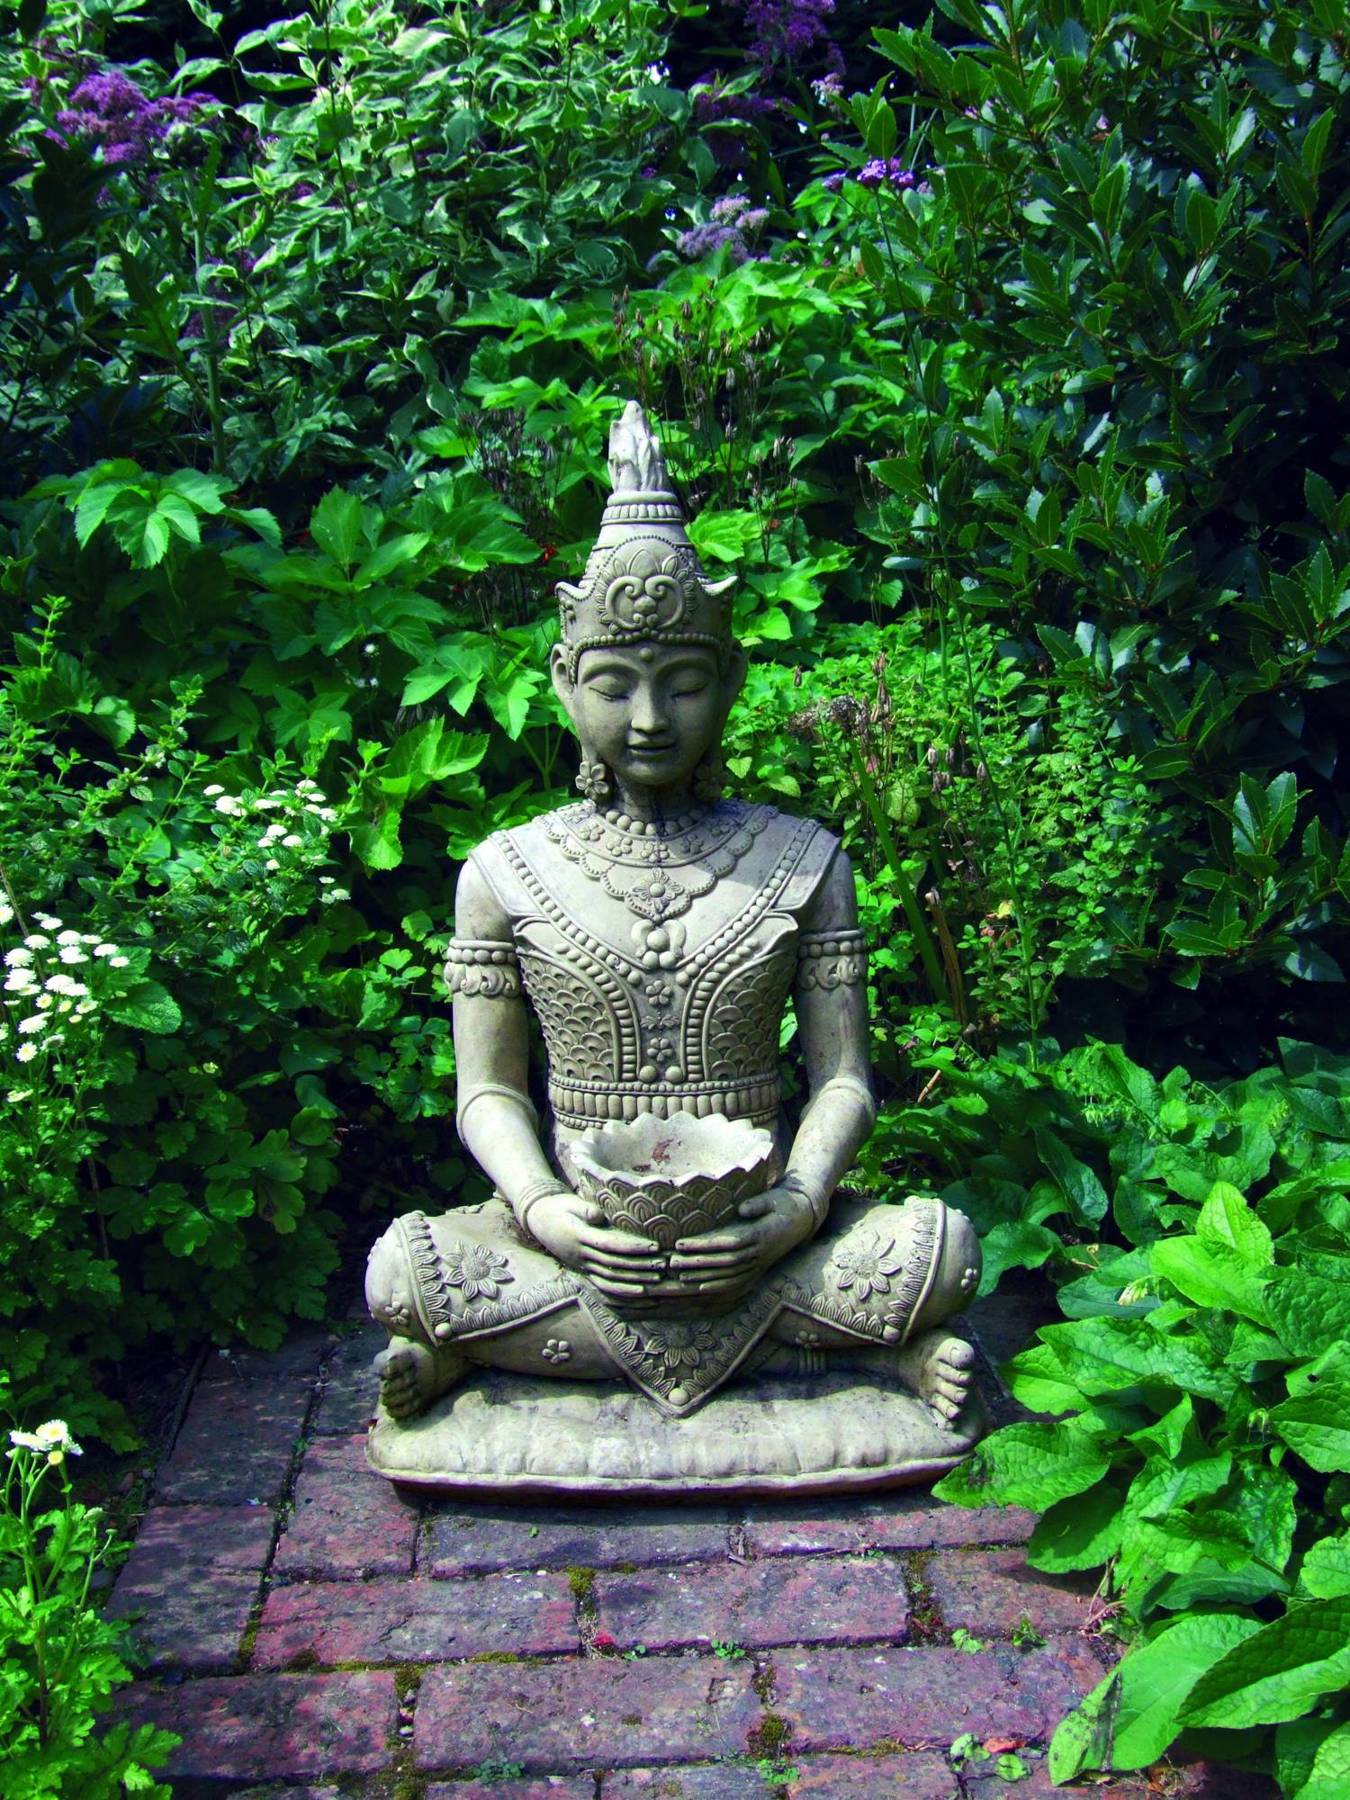 31cm tall Kneeling Buddha Statue Garden Ornament